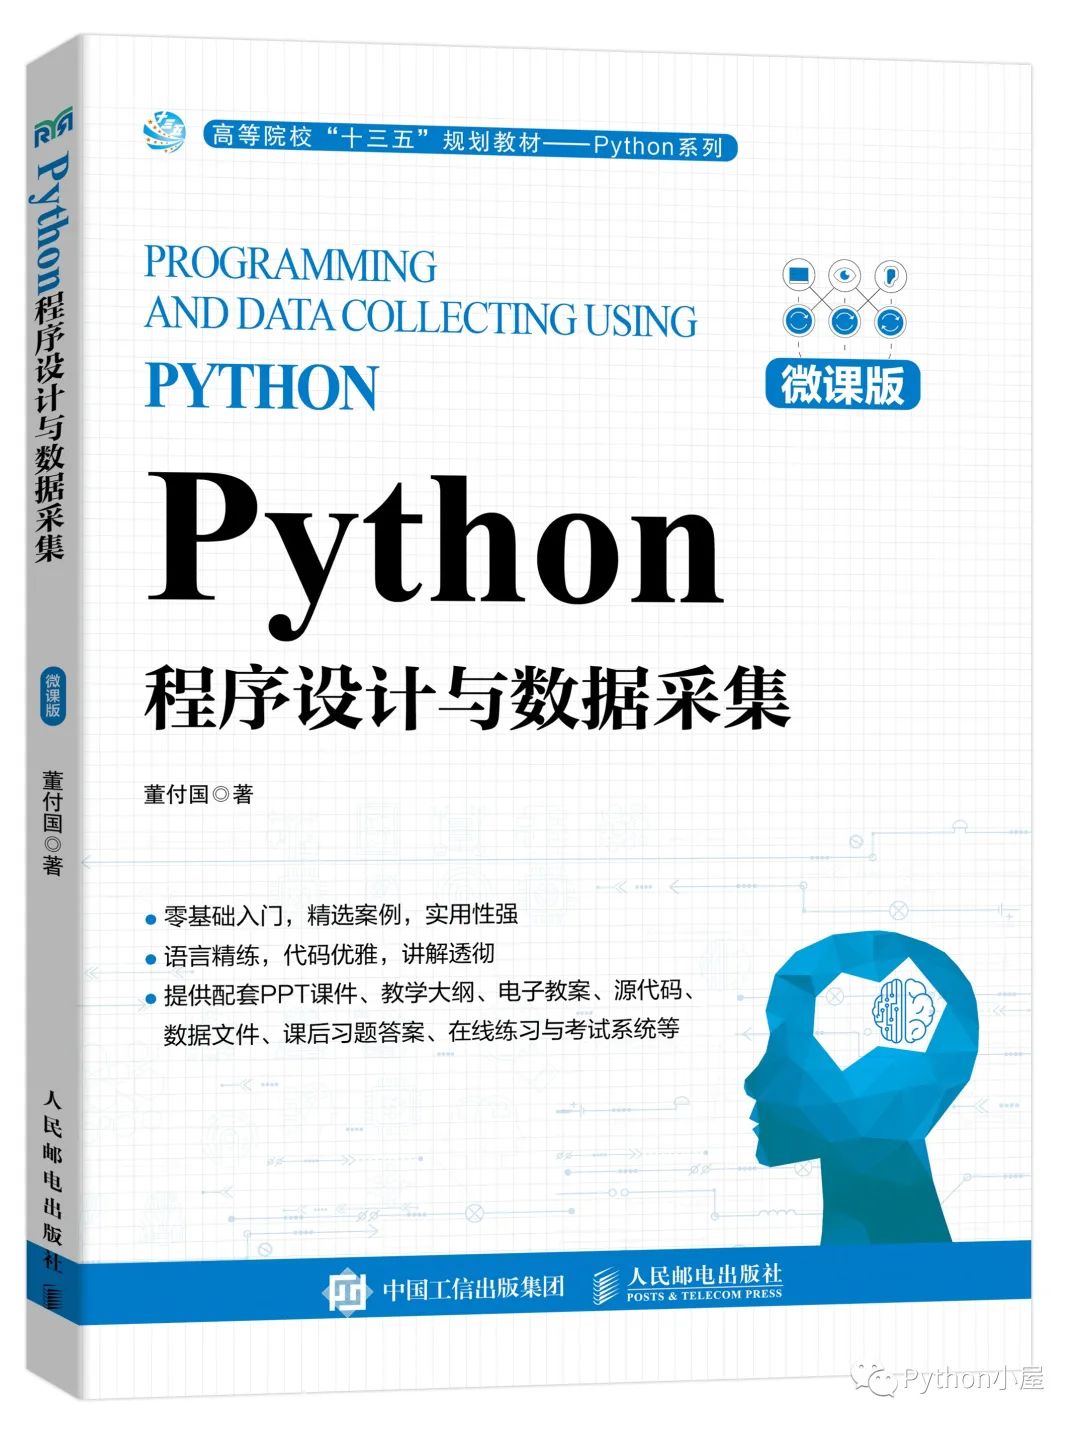 Python实现最近最少使用LRU算法管理缓存_发送消息